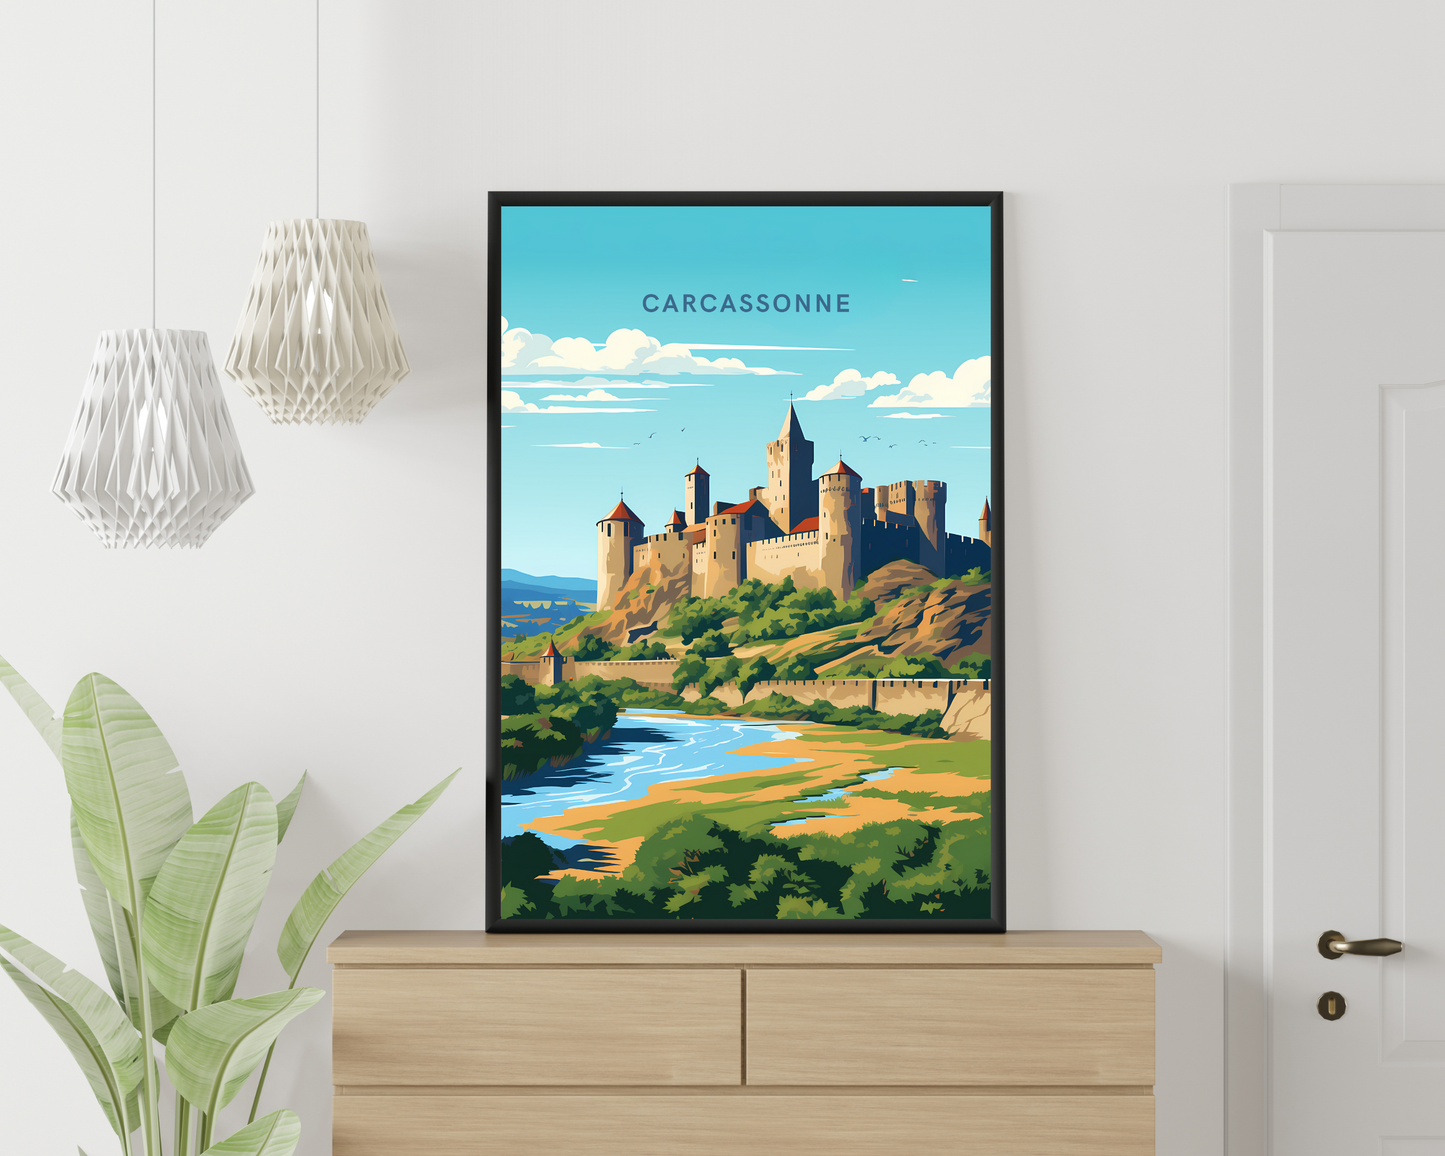 Carcassonne France Travel Poster Print - Pitchers Design